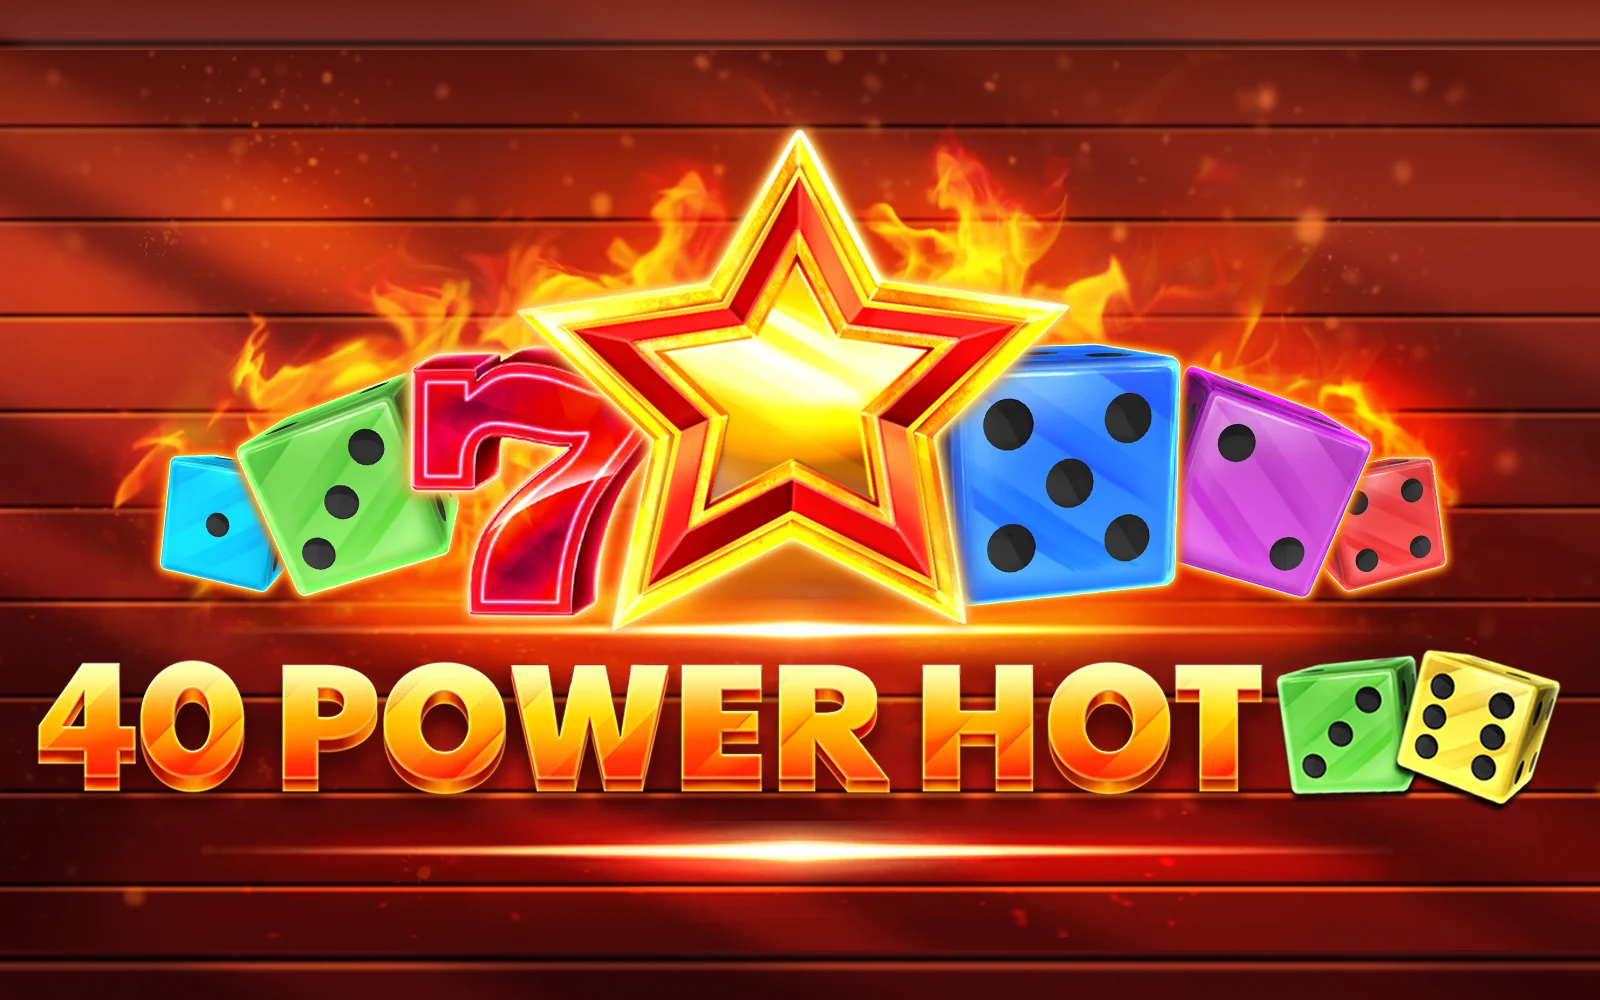 Play 40 Power Hot Dice on Starcasinodice.be online casino